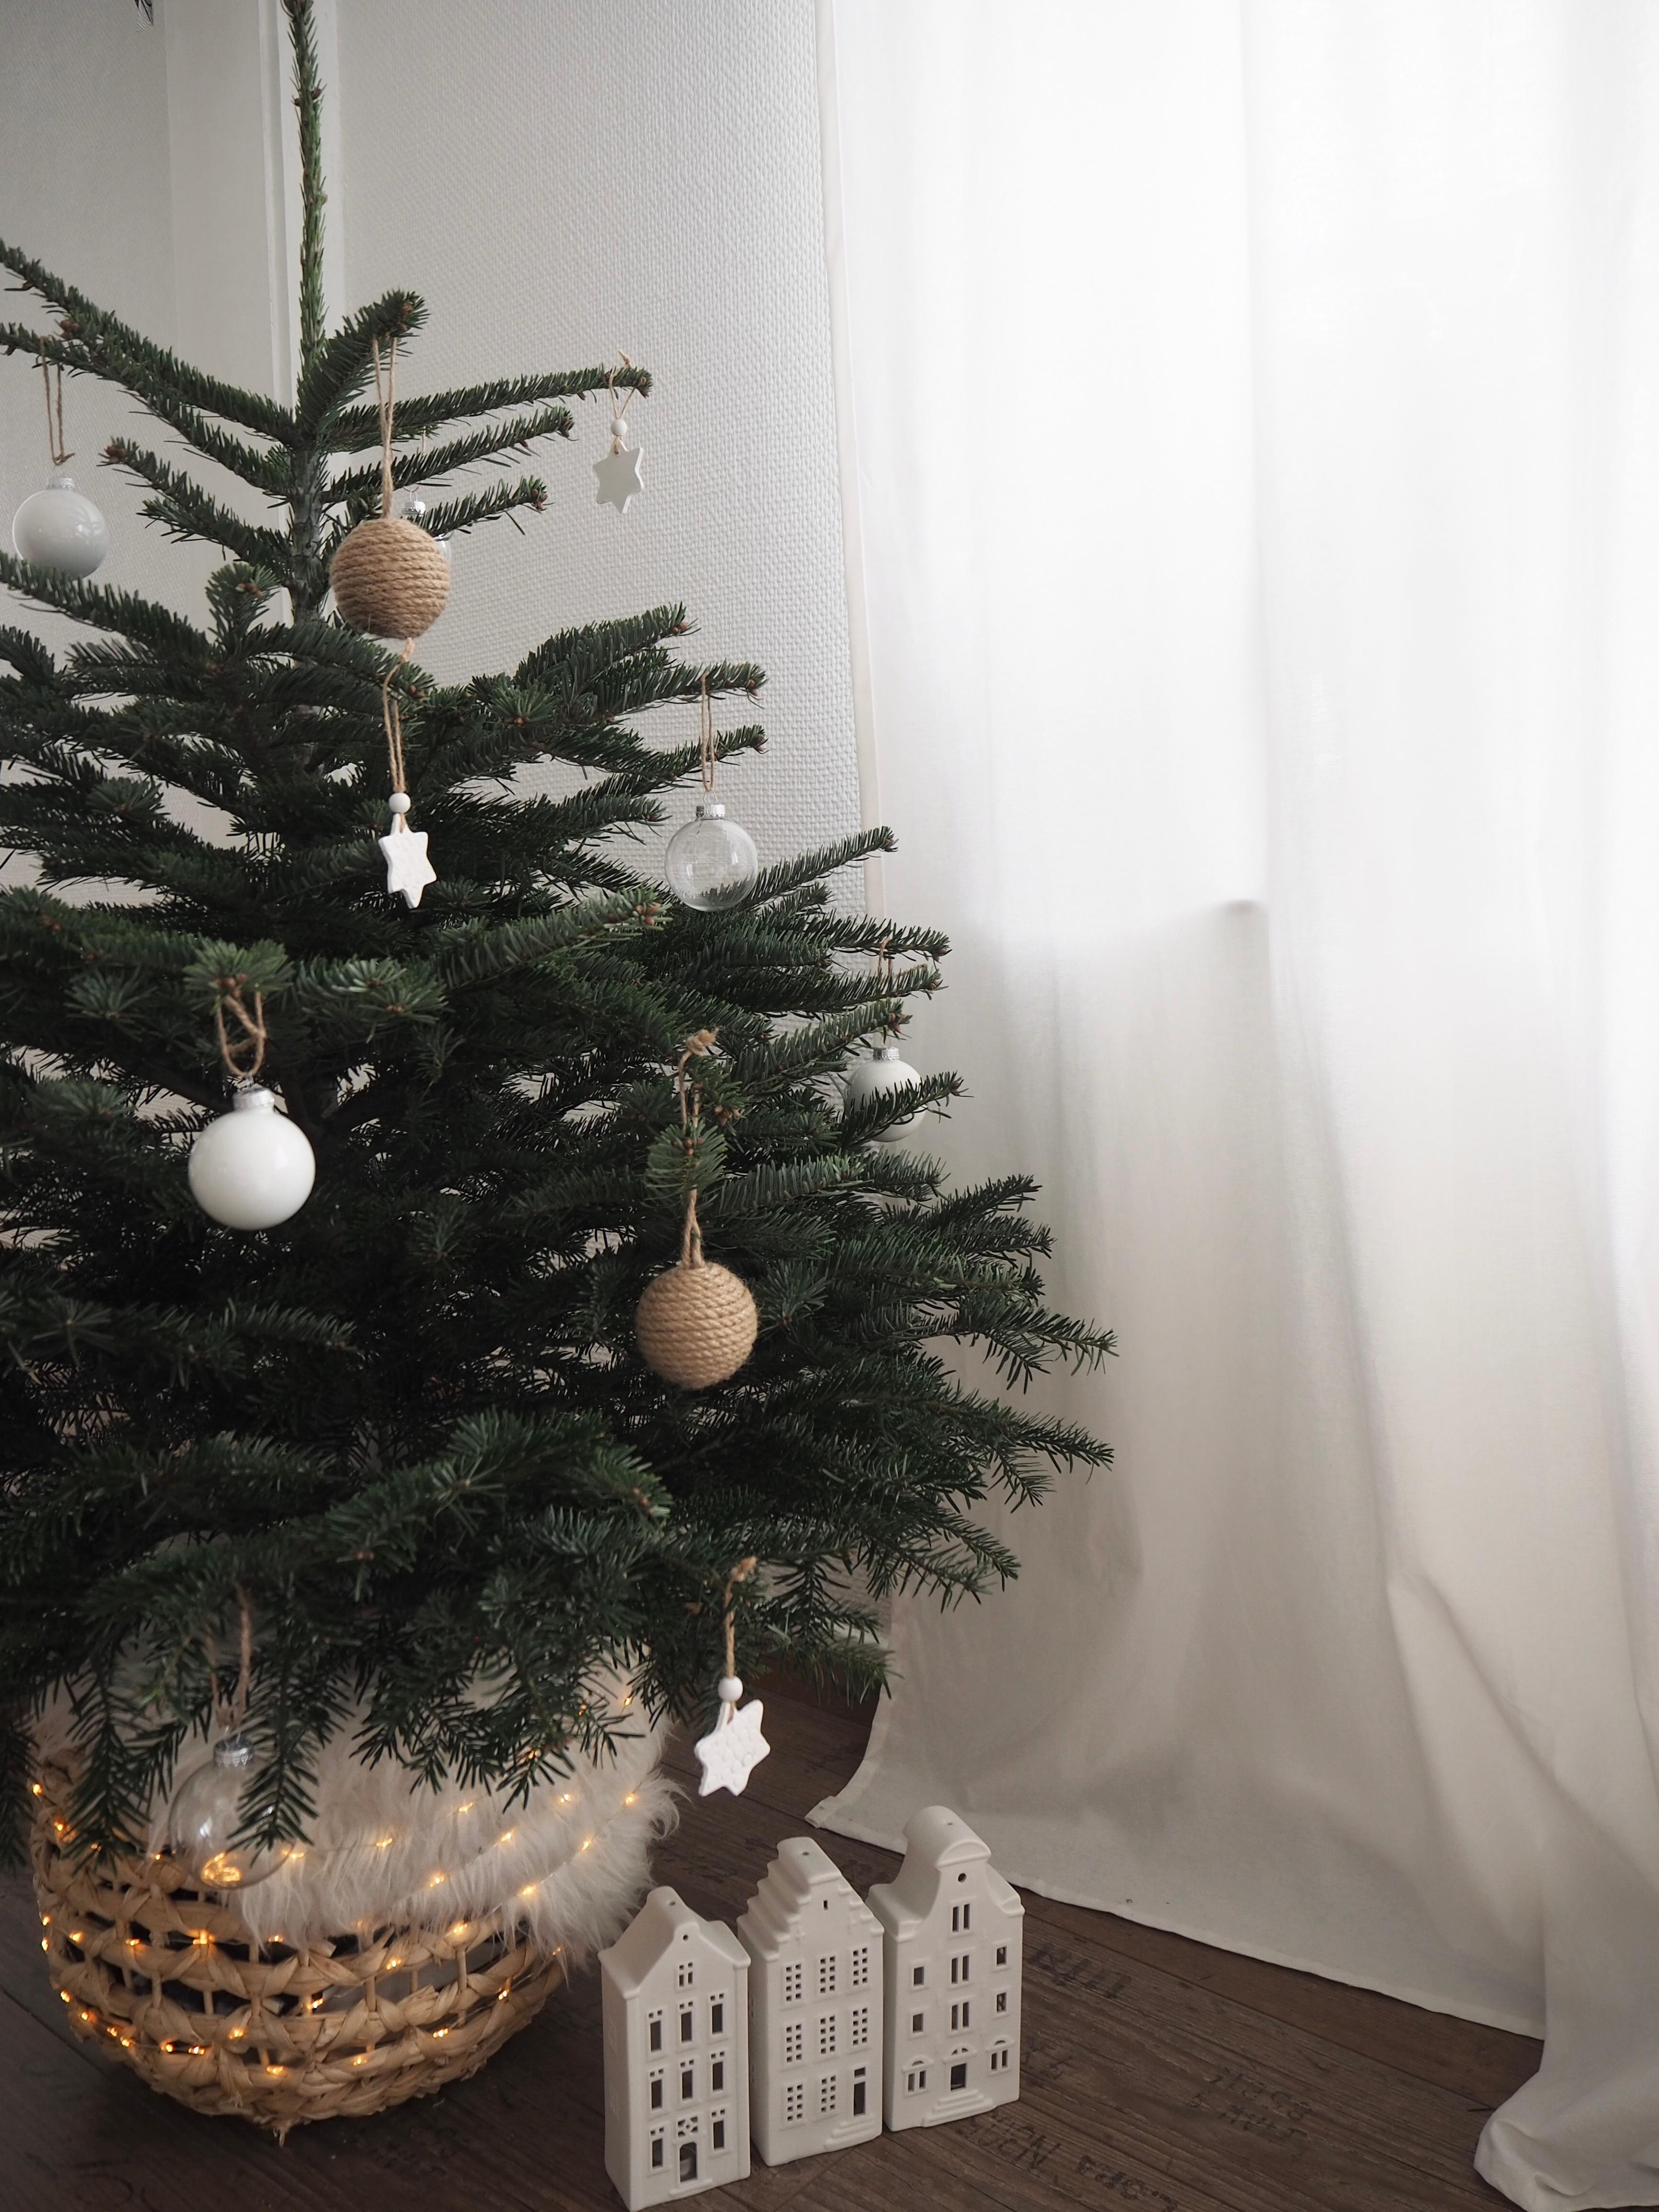 Unser Bäumchen #christbaum #christbaumschmuck #jute #diyanhänger #natural #naturmaterialien #weihnachtsbaum 